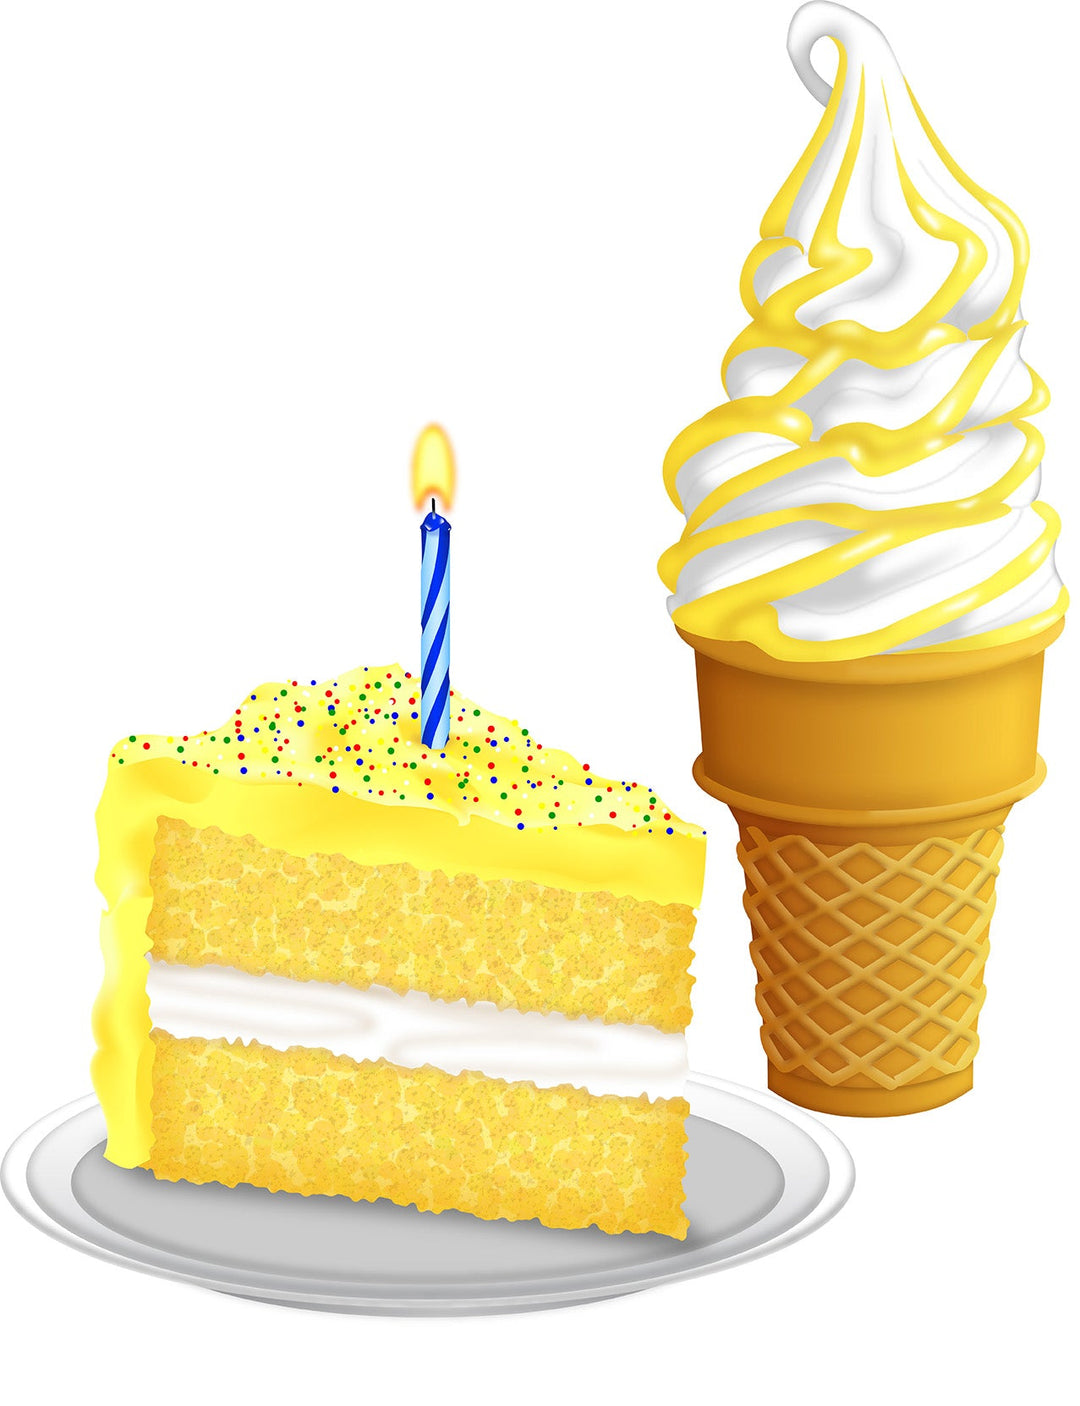 BIRTHDAY CAKE FLAVOR - Original “Stripe” Syrup For Soft Serve by Flavor Burst Canada - 1 Gallon (3.8 liters)